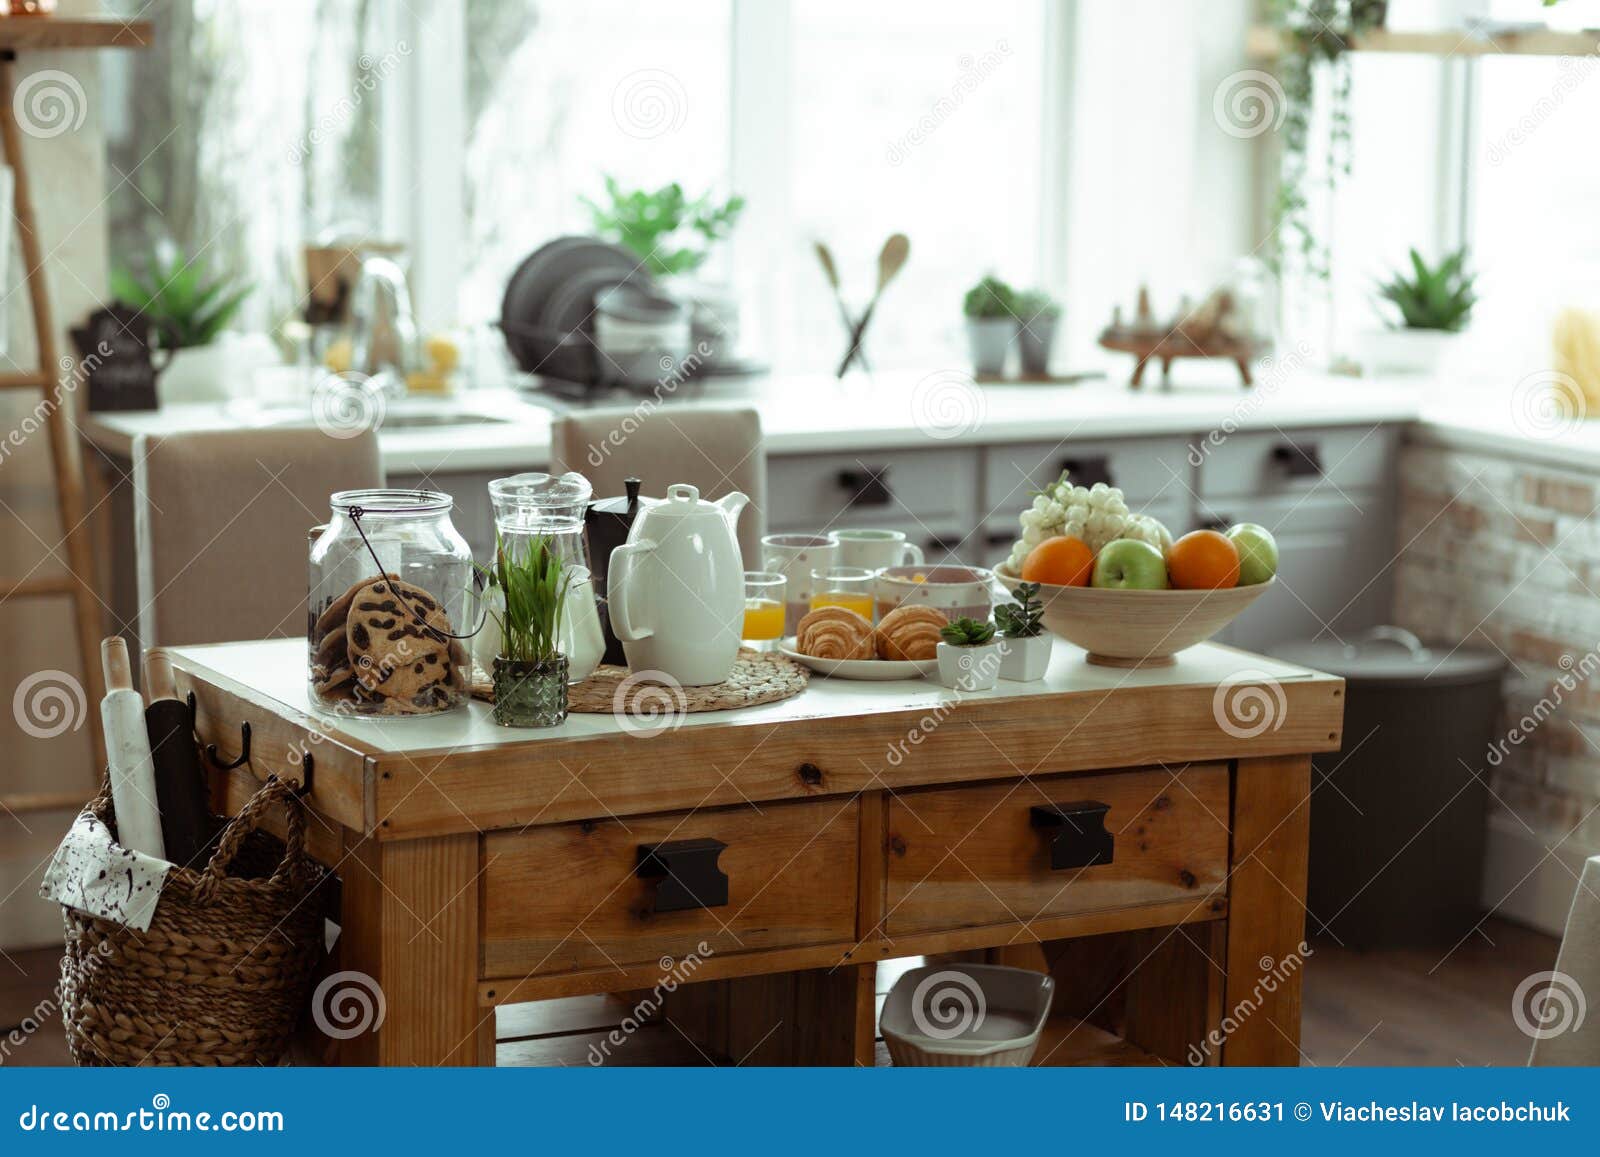 stylish kitchen table